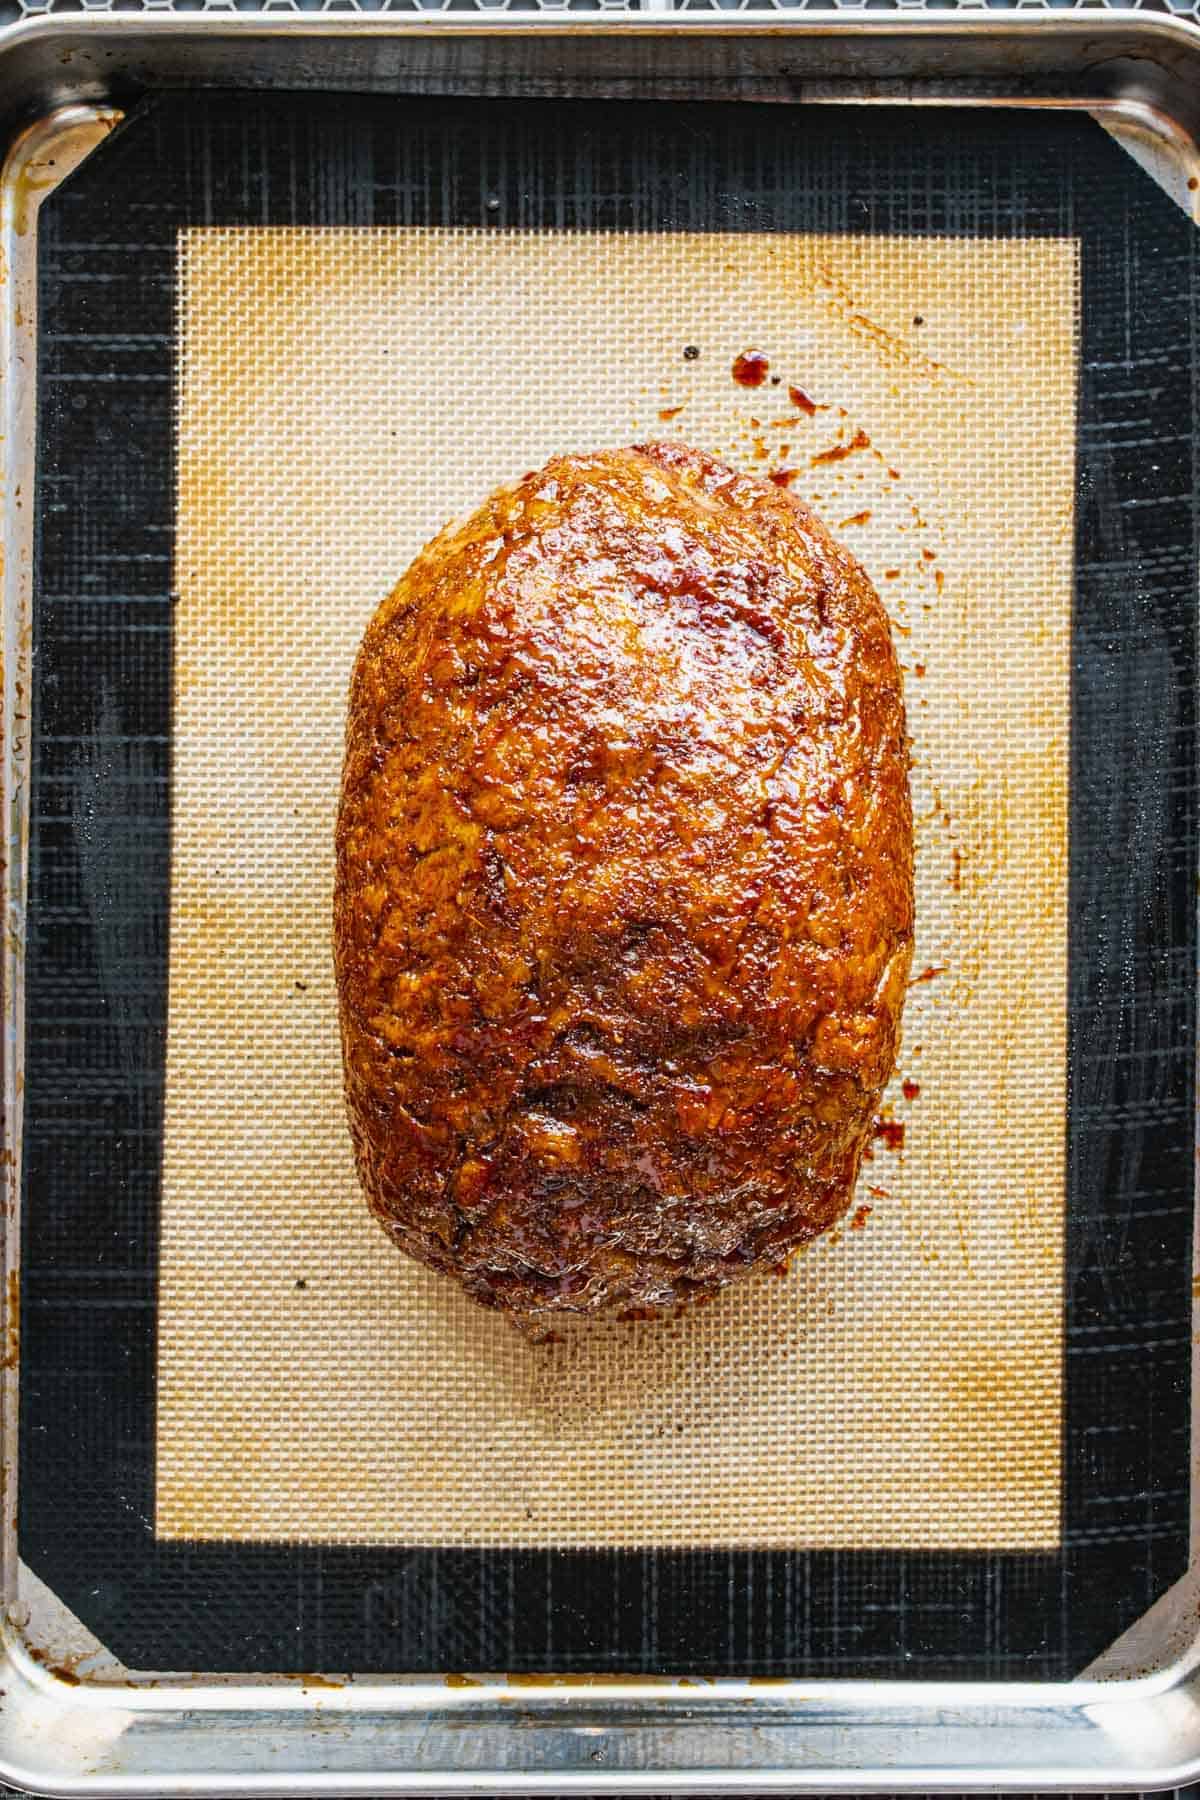 Roasted vegan turkey with glaze.